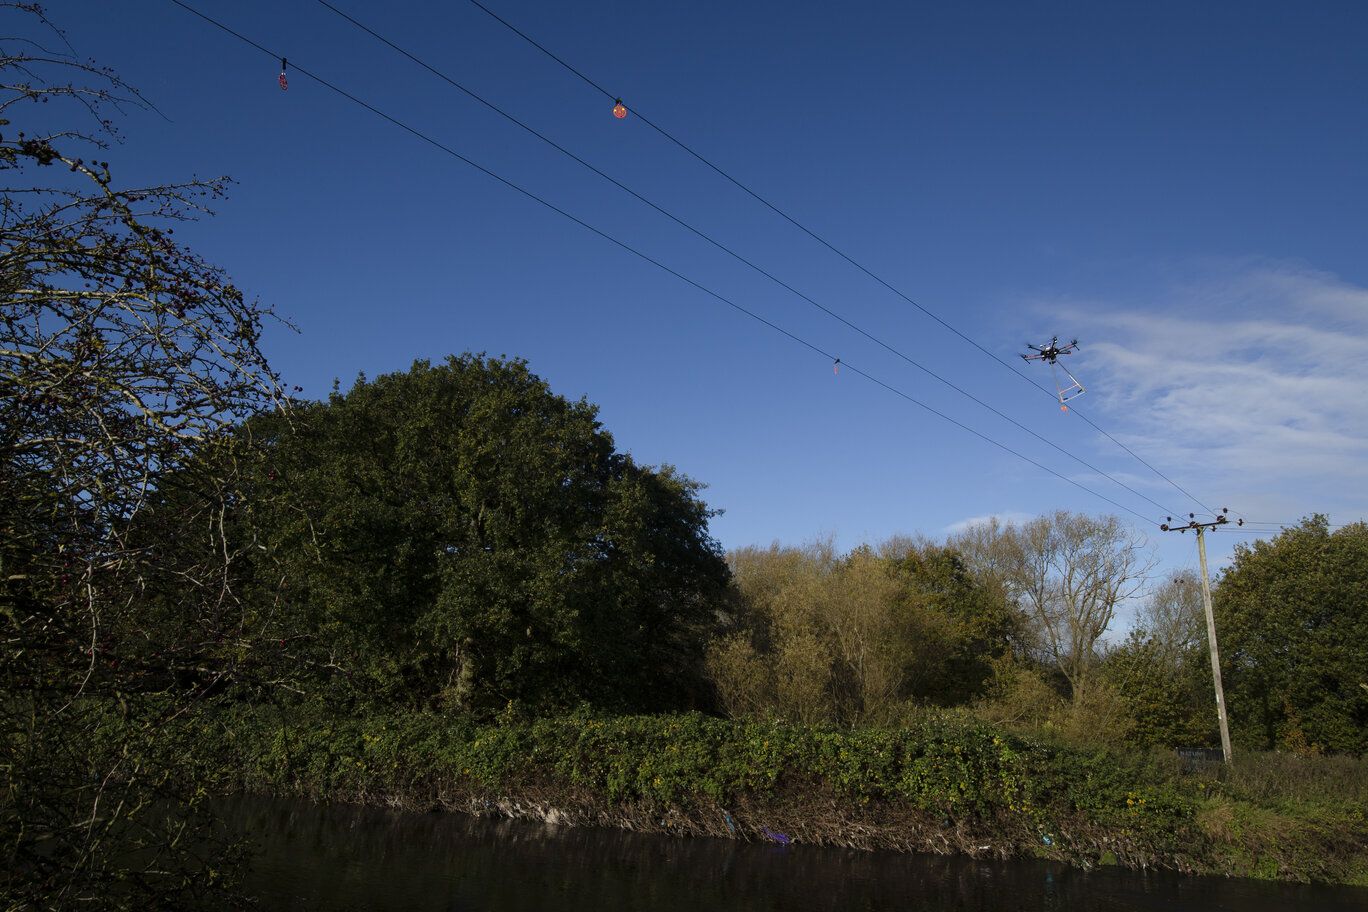 Drone flying near overhead power lines